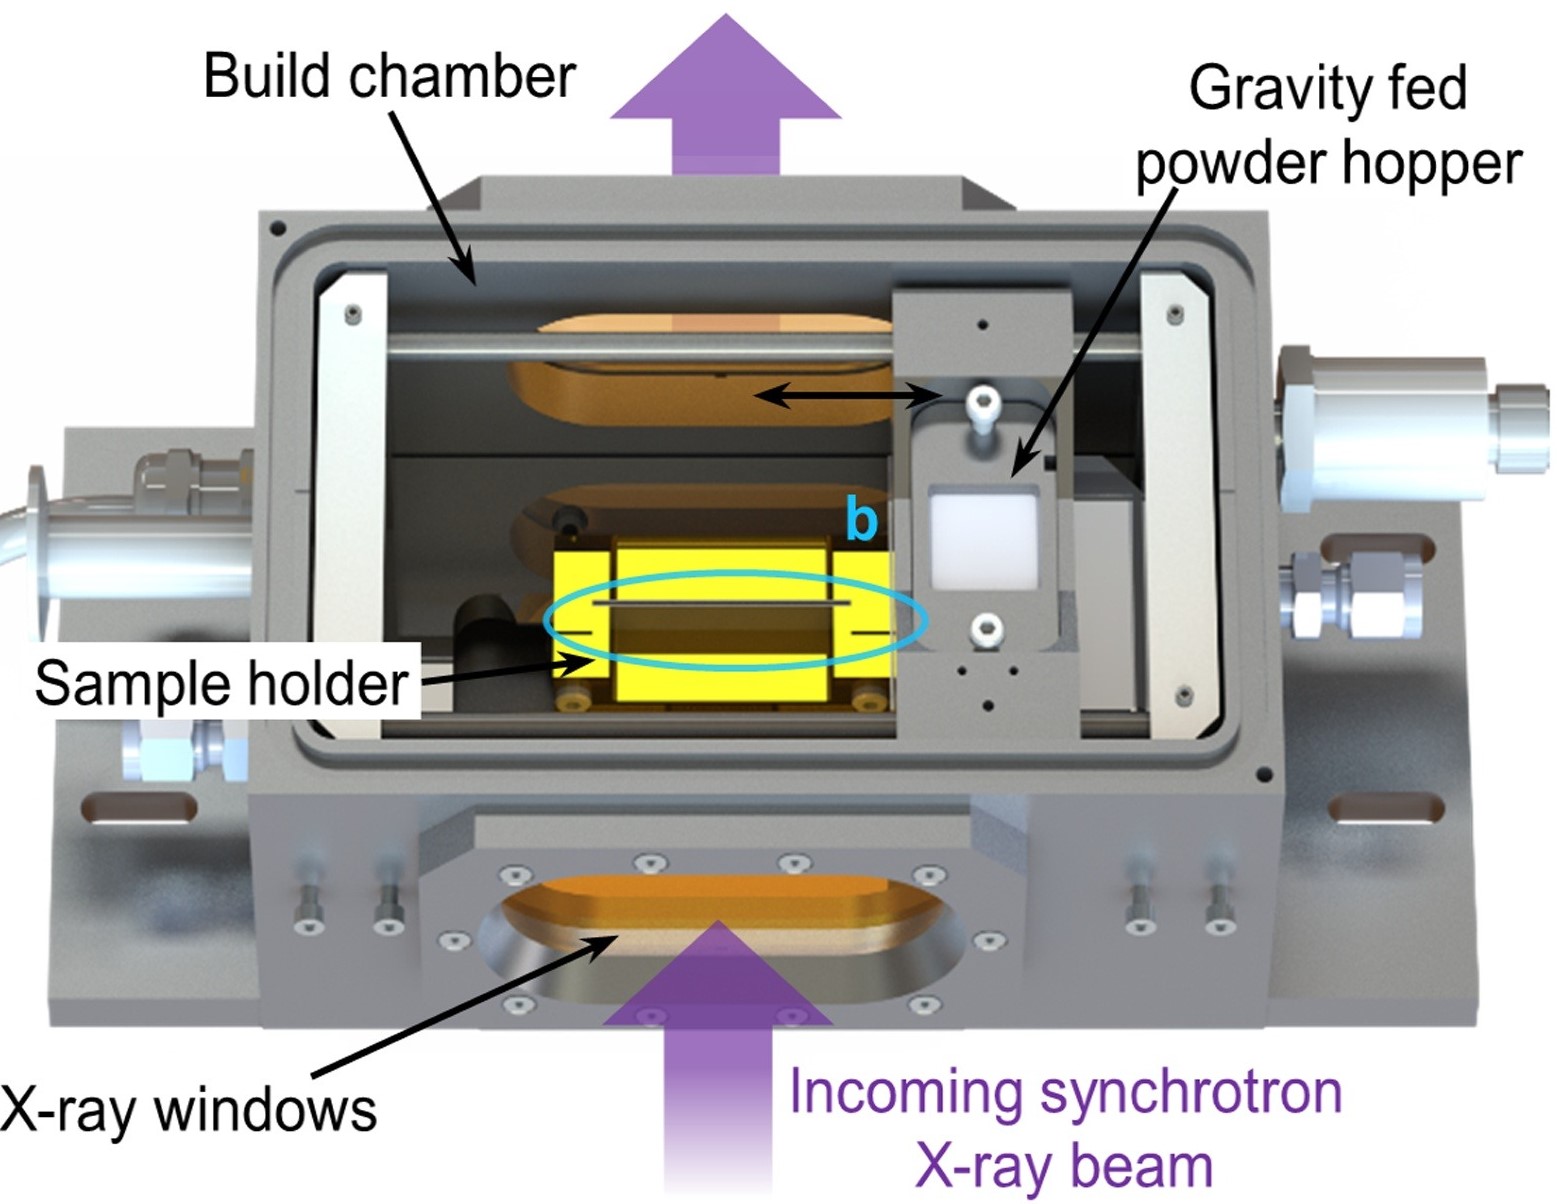  Shedding new light on laser powder bed fusion at ESRF – the European Synchrotron (cover image)